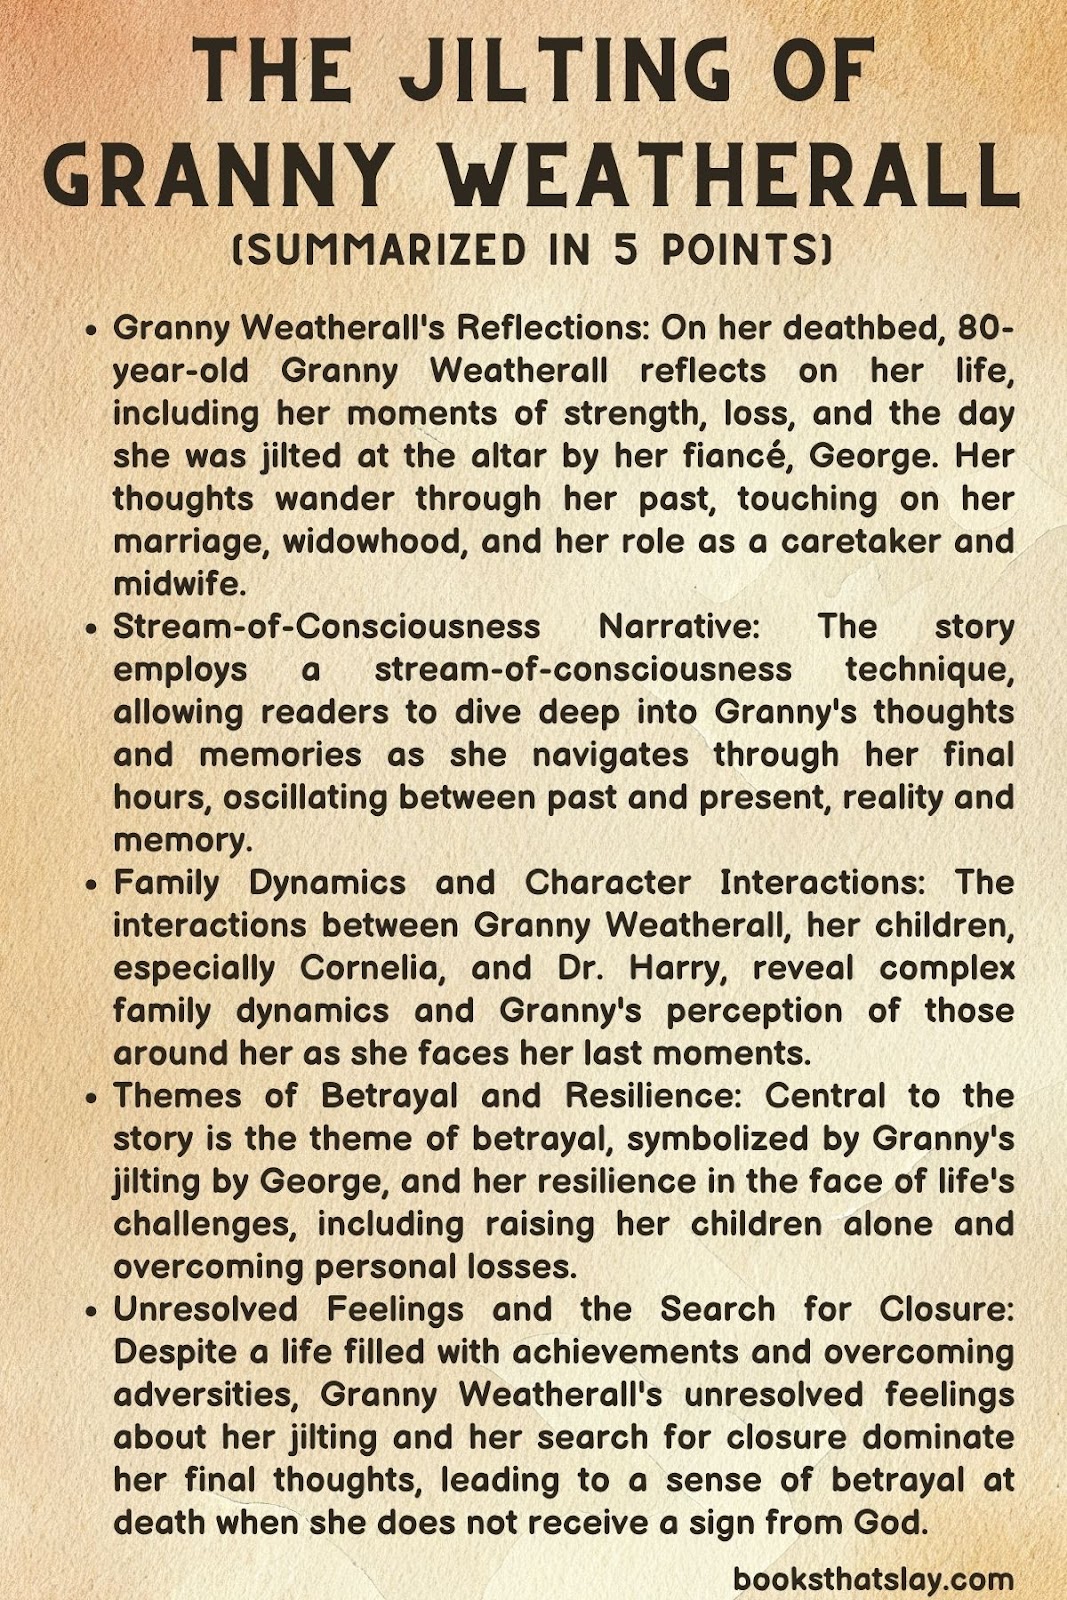 The Jilting of Granny Weatherall Summary